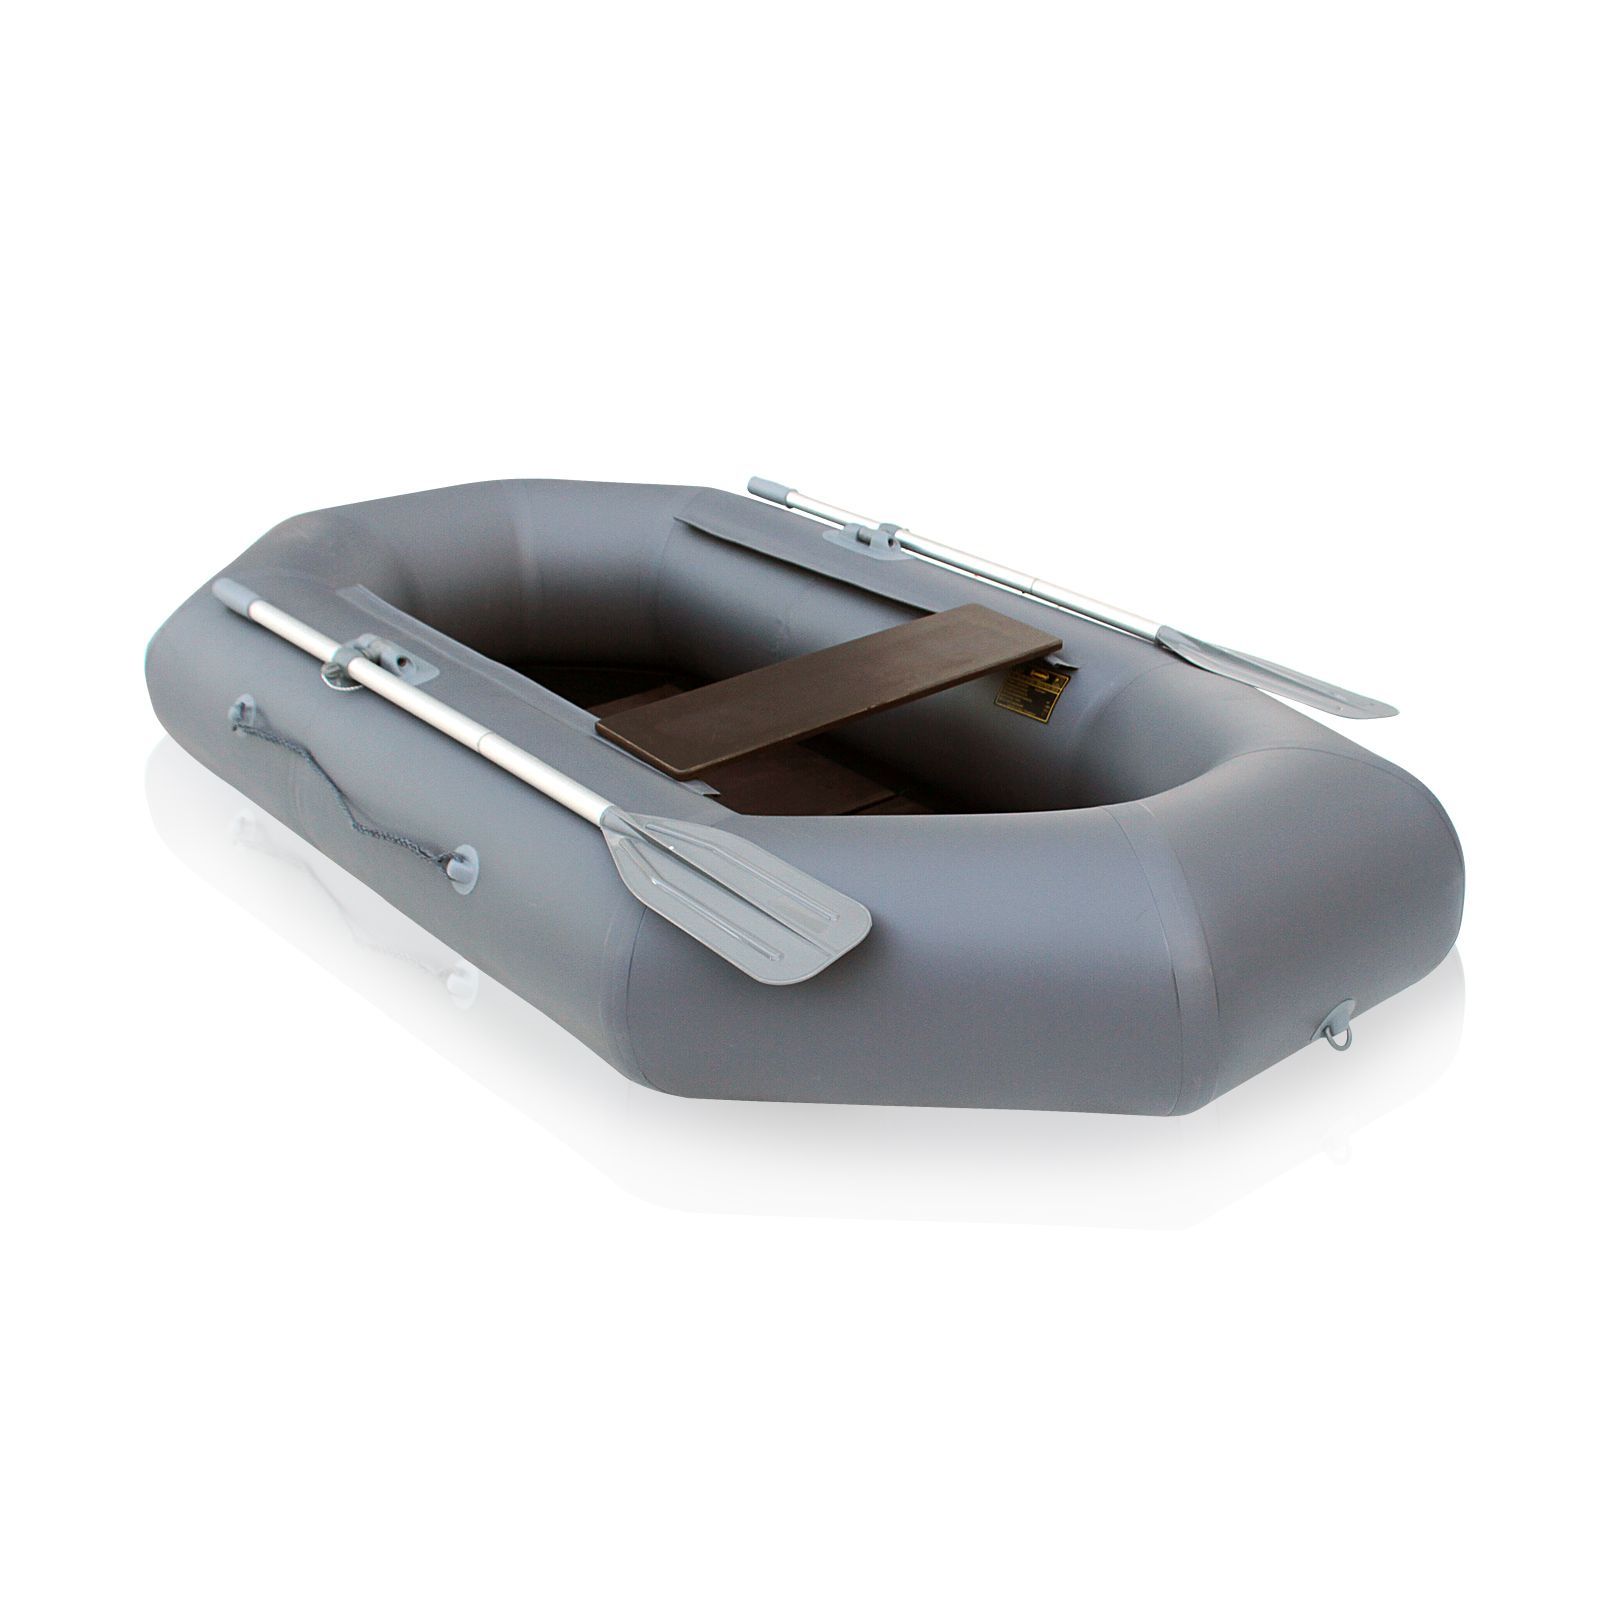 Лодка ПВХ Компакт-220N- ФС фанерная слань серый цвет упаковка-мешок оксфорд